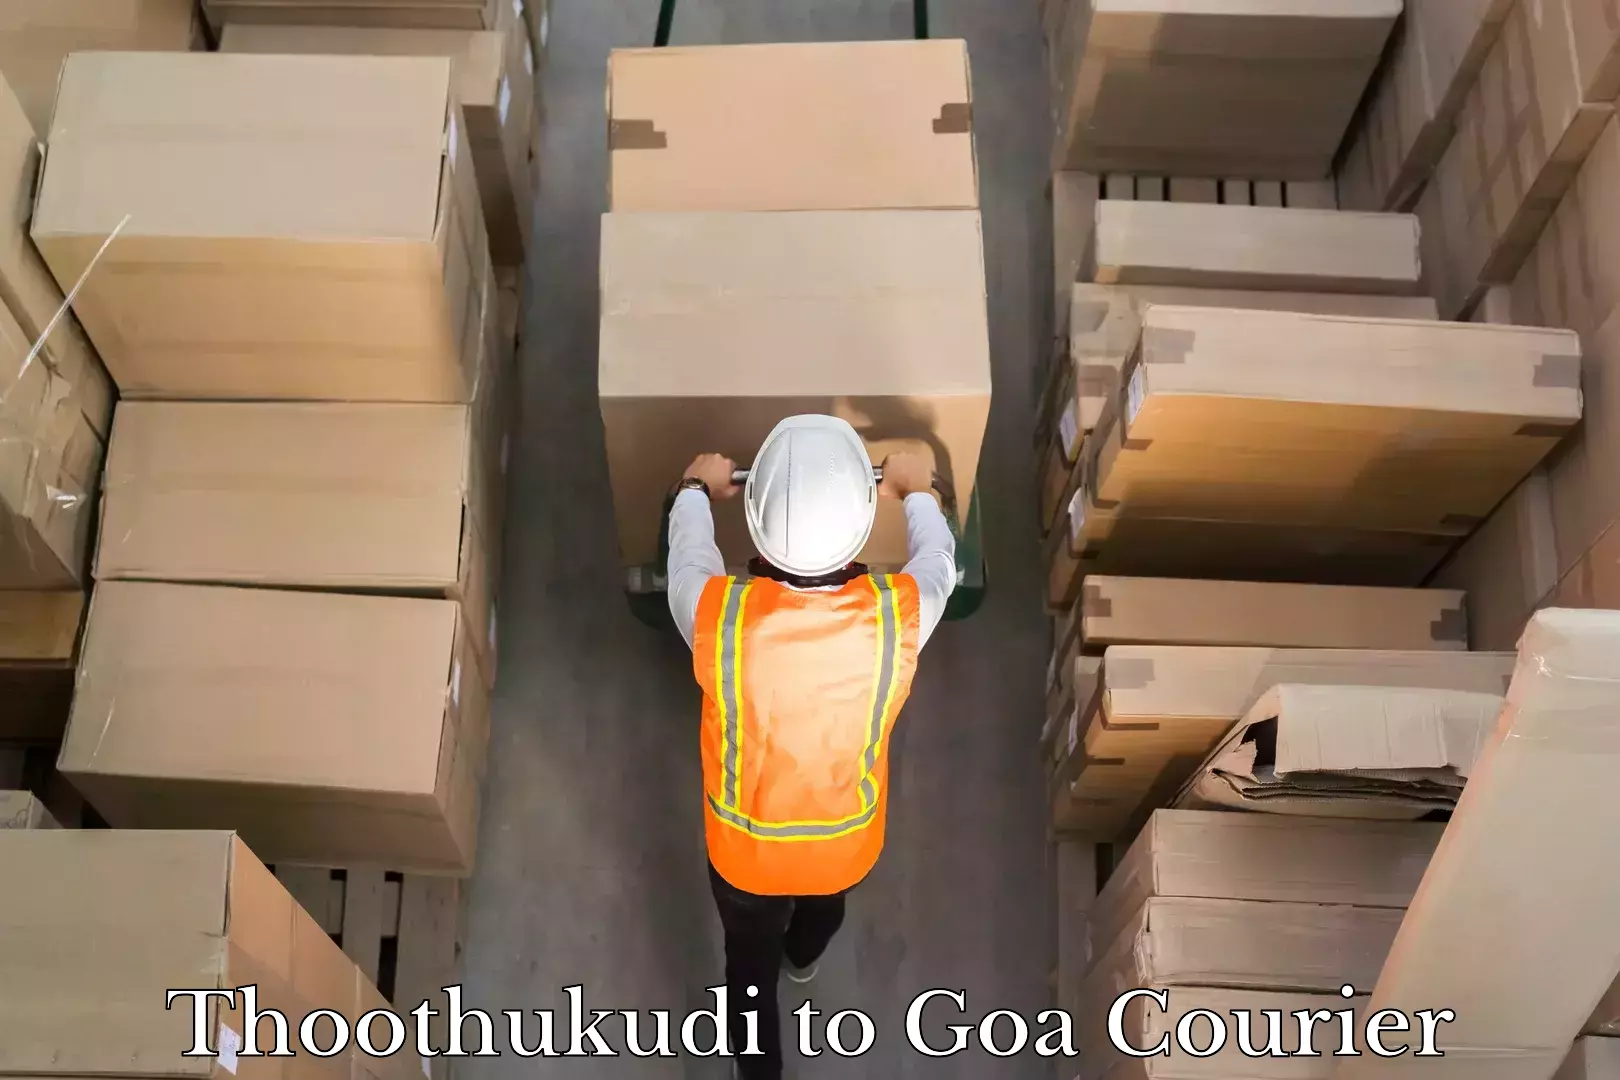 Advanced delivery network Thoothukudi to Goa